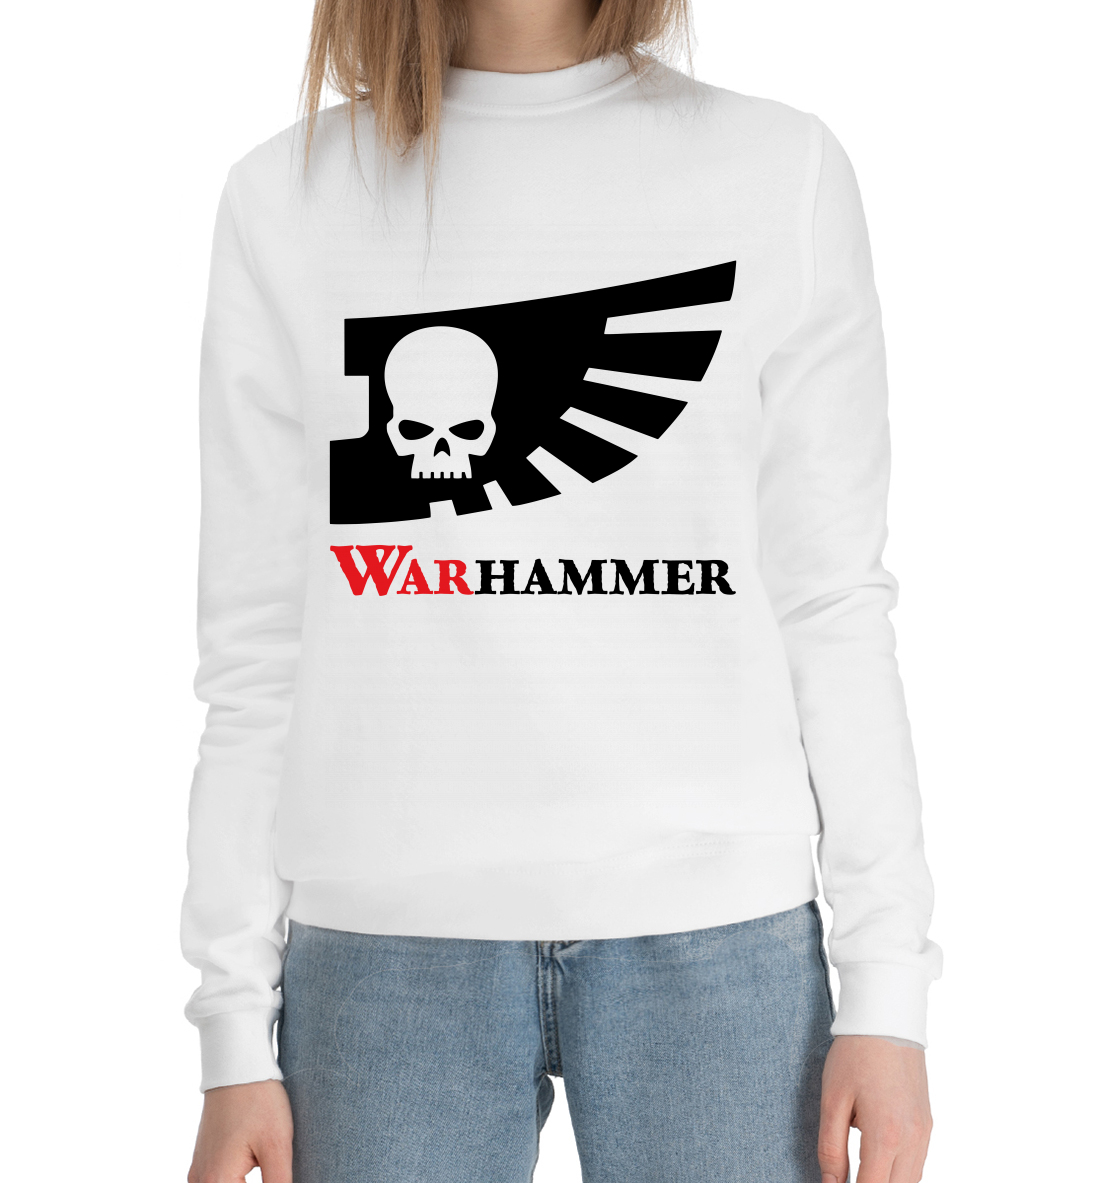 Женский Хлопковый свитшот с принтом Warhammer, артикул WHR-789781-hsw-1mp